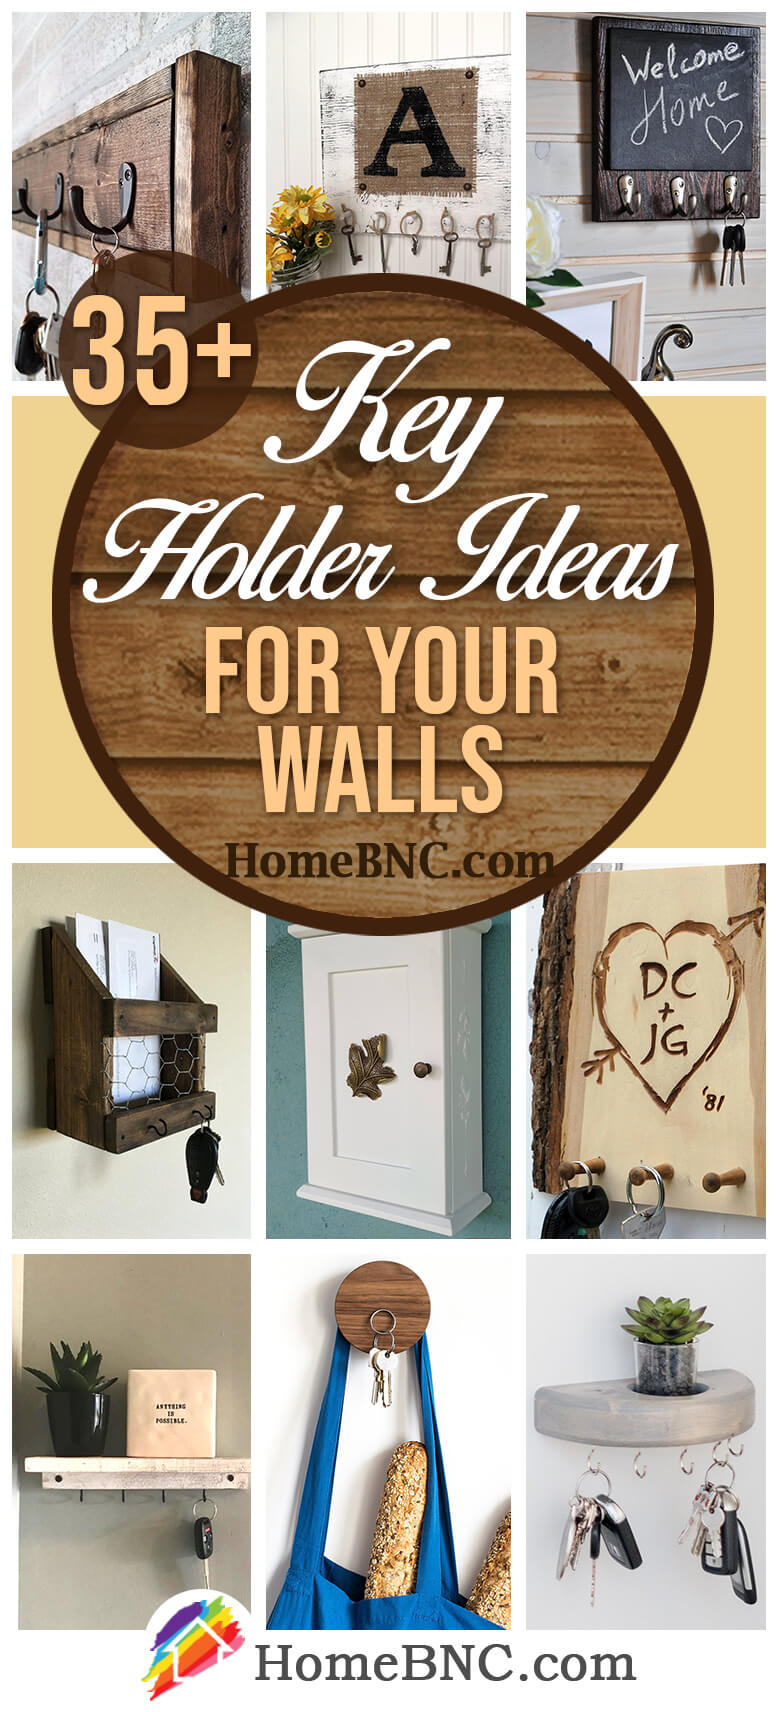 Letter Mail Post Holder Key Rack Hooks Home Shelf Wall Organizer Entryway Decor